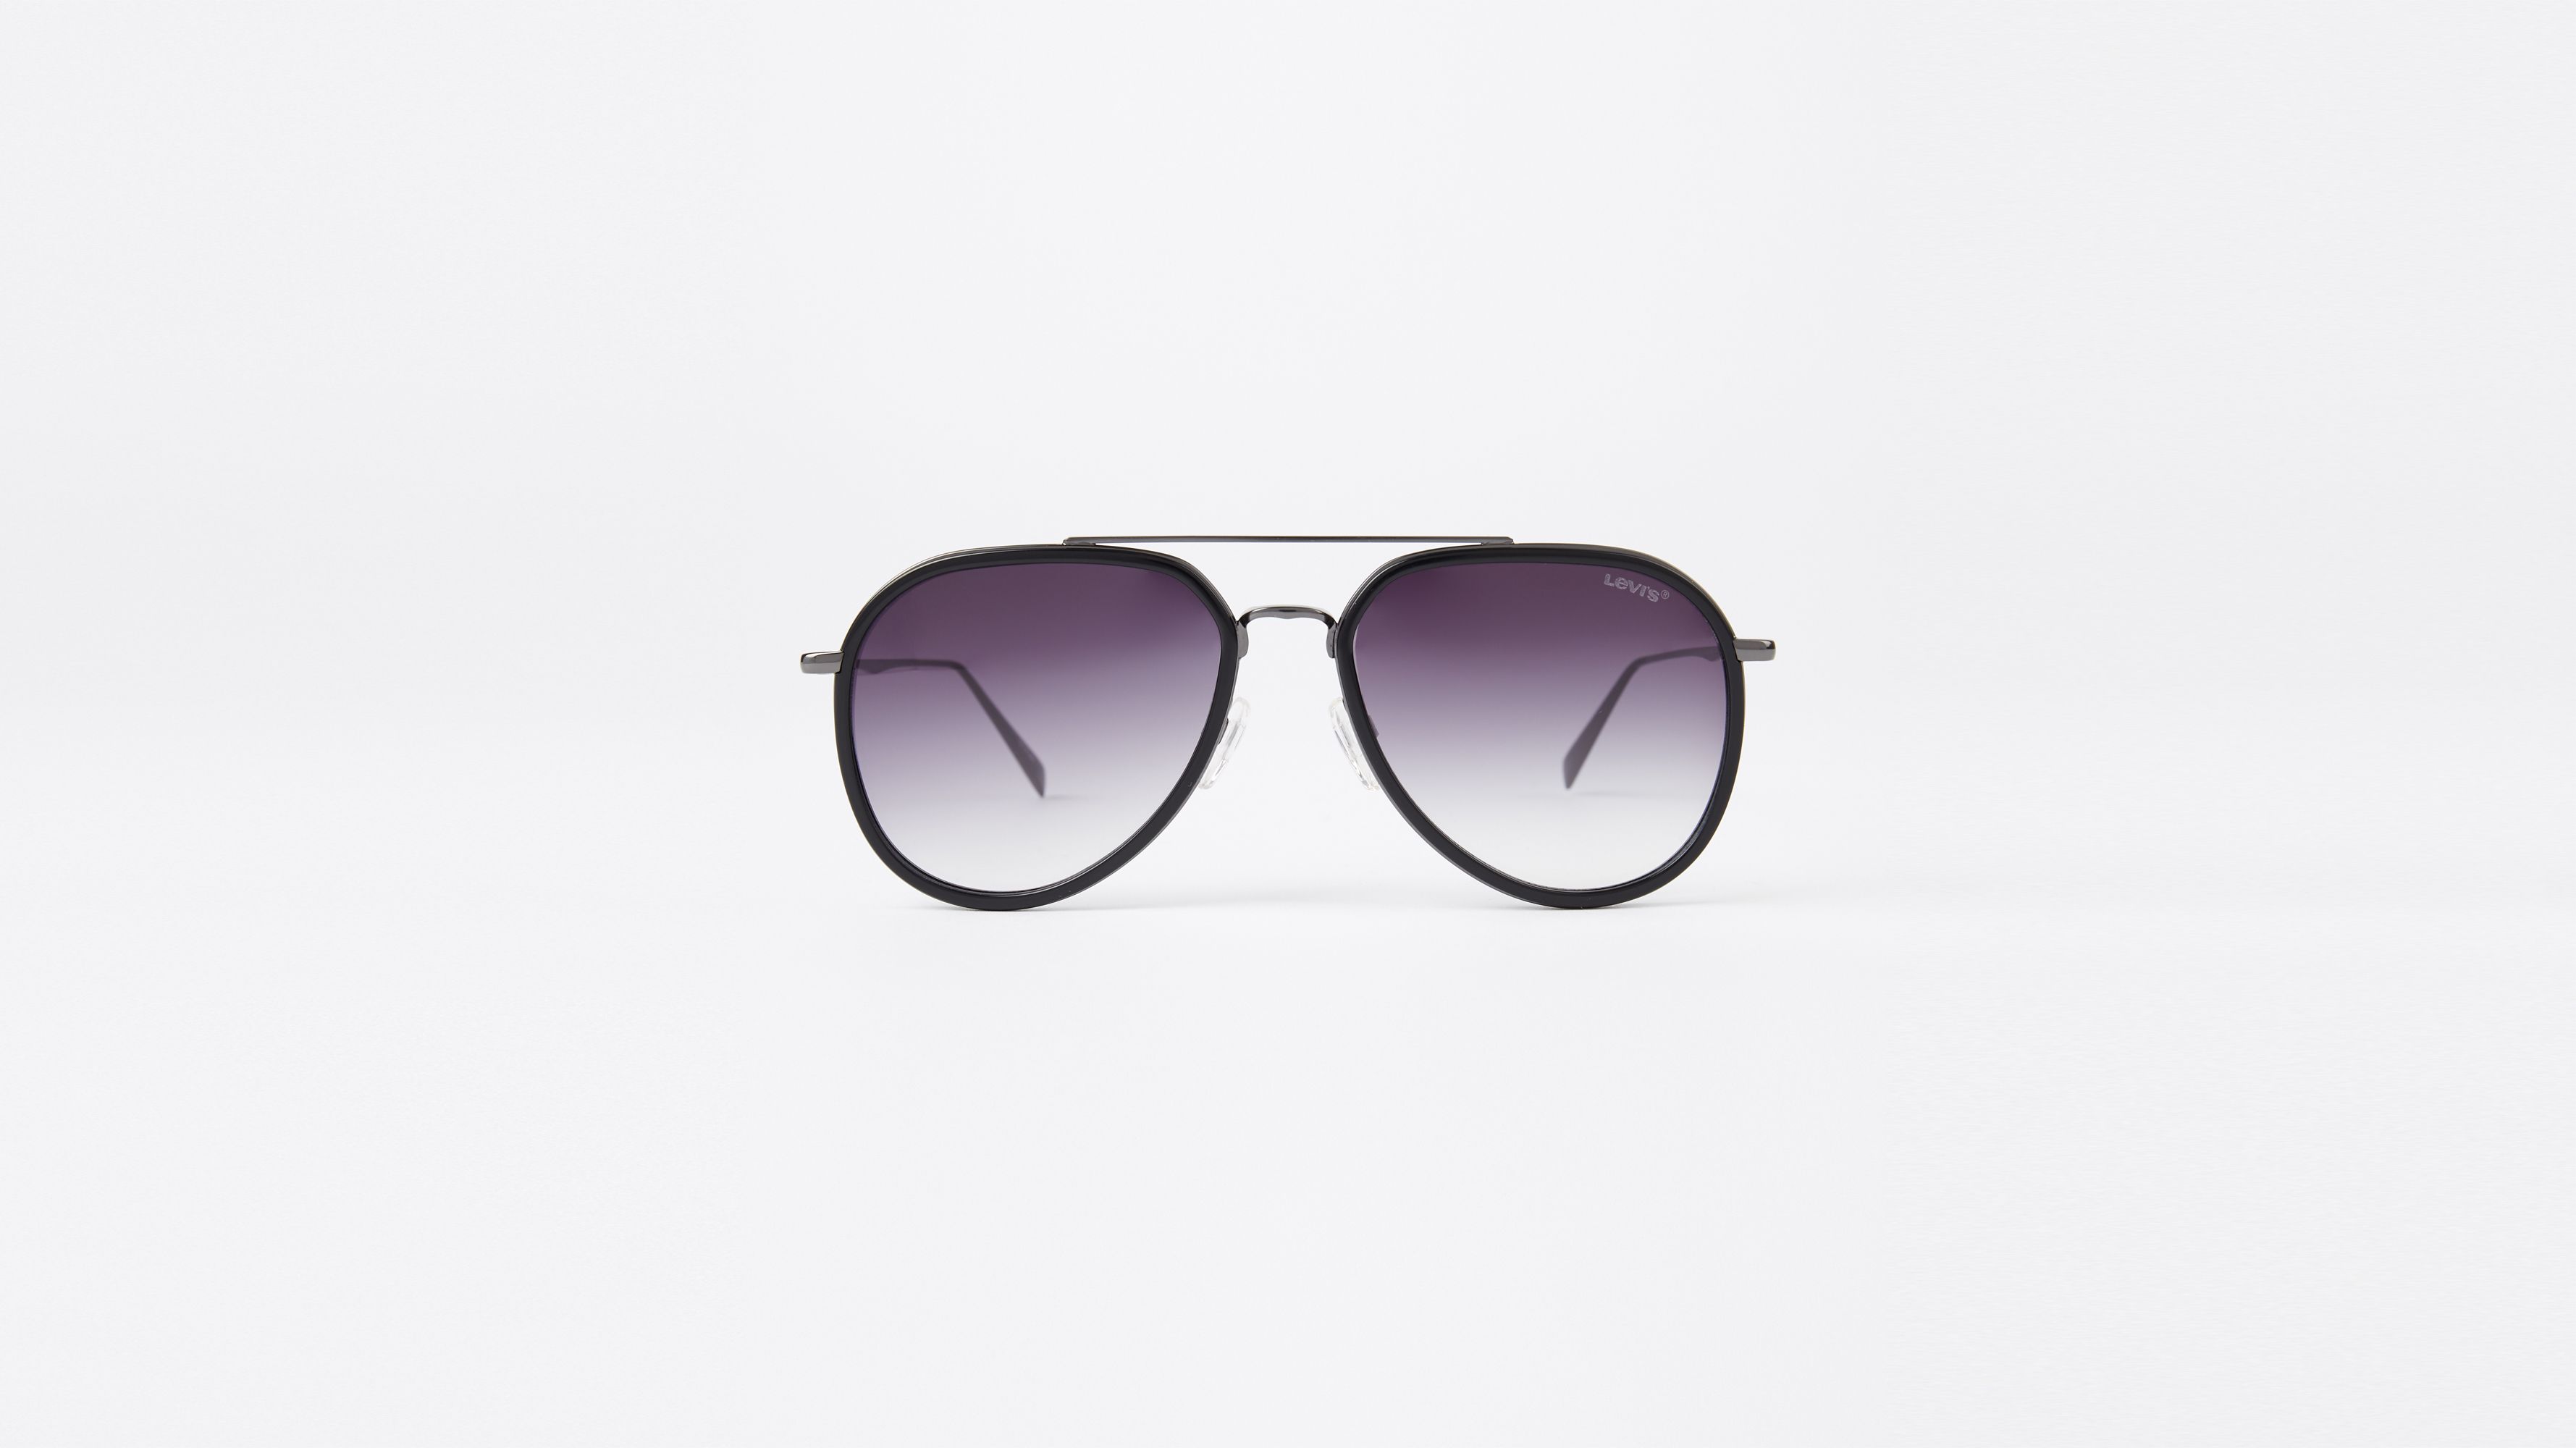 Levis Sunglasses Deals, 58% OFF | www.pegasusaerogroup.com